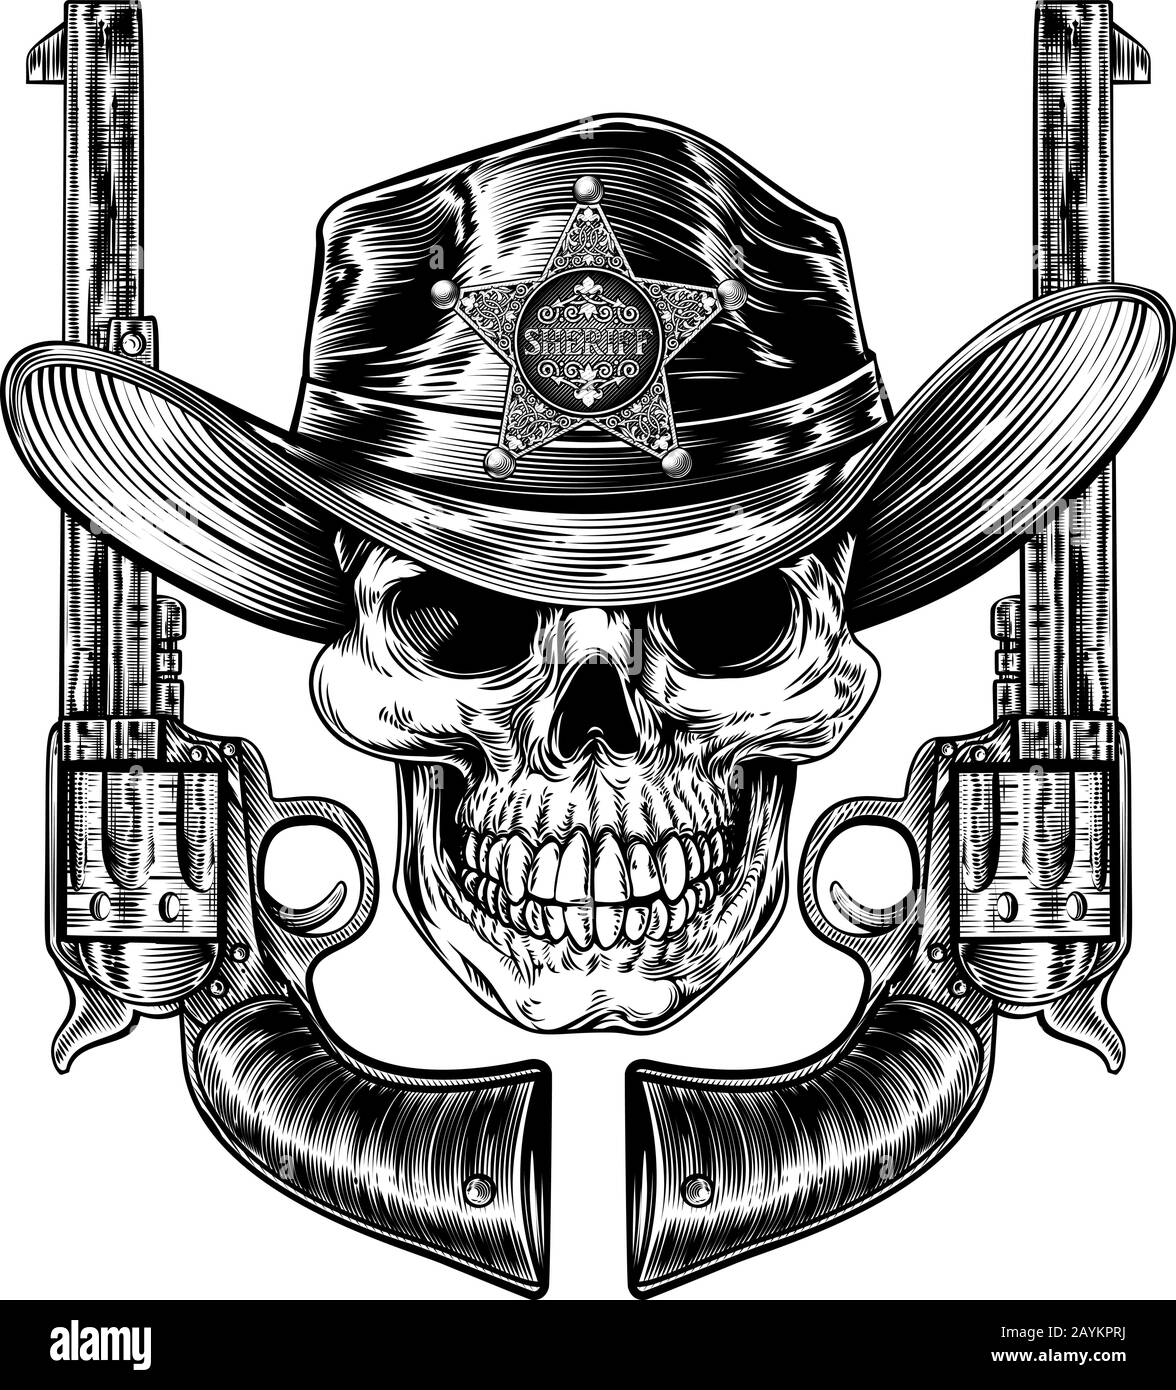 Sheriff Cowboy Skull and Pistols Stock Vector